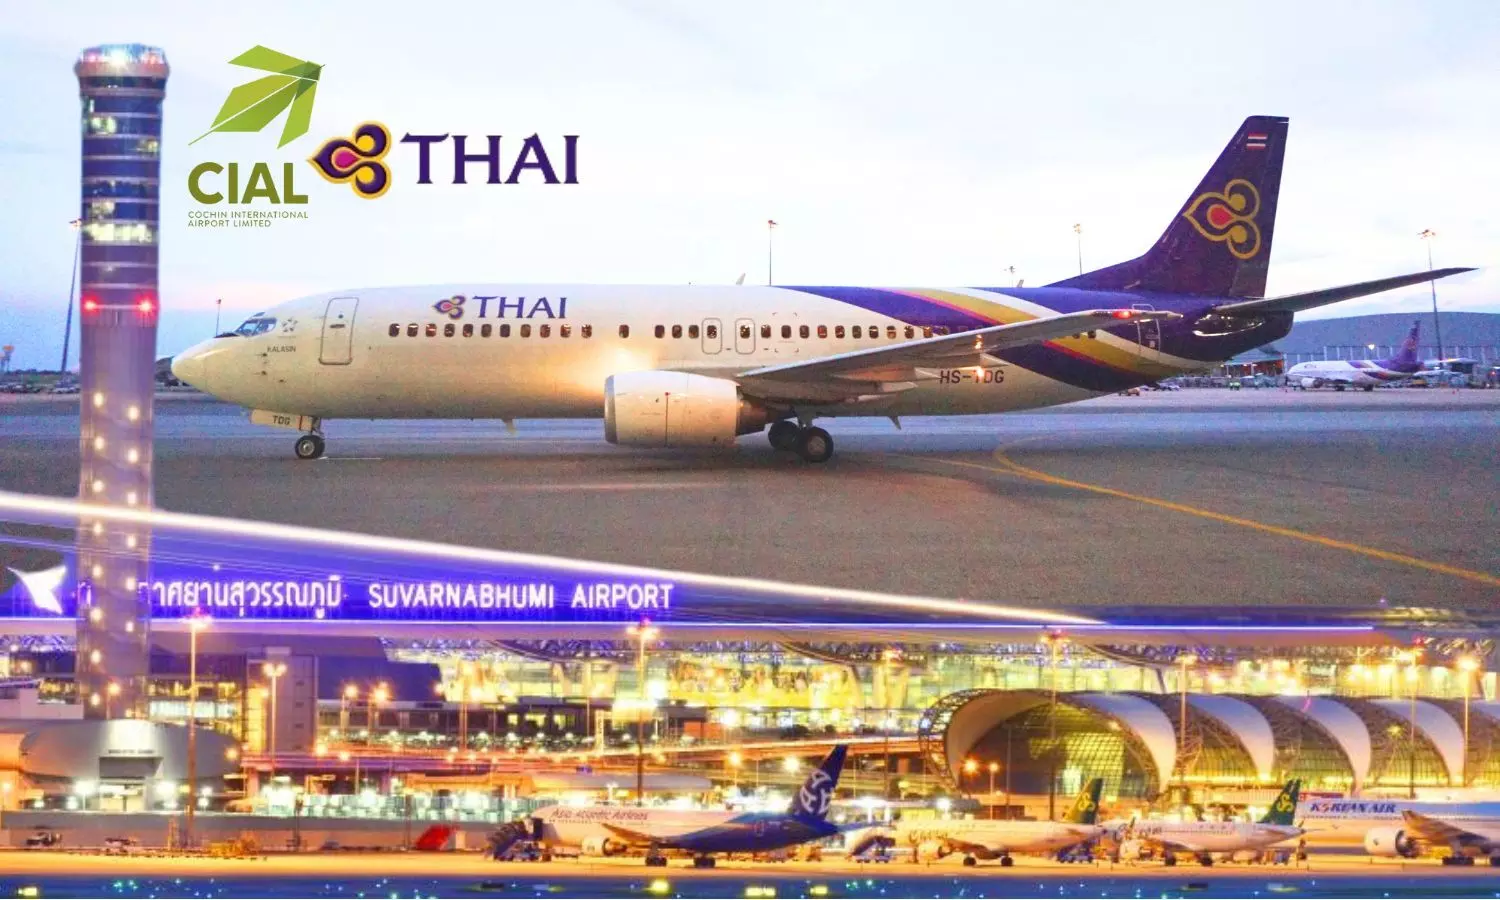 Suvarnabhumi Airport, Thai Logo, CIAL Logo, Thai Air